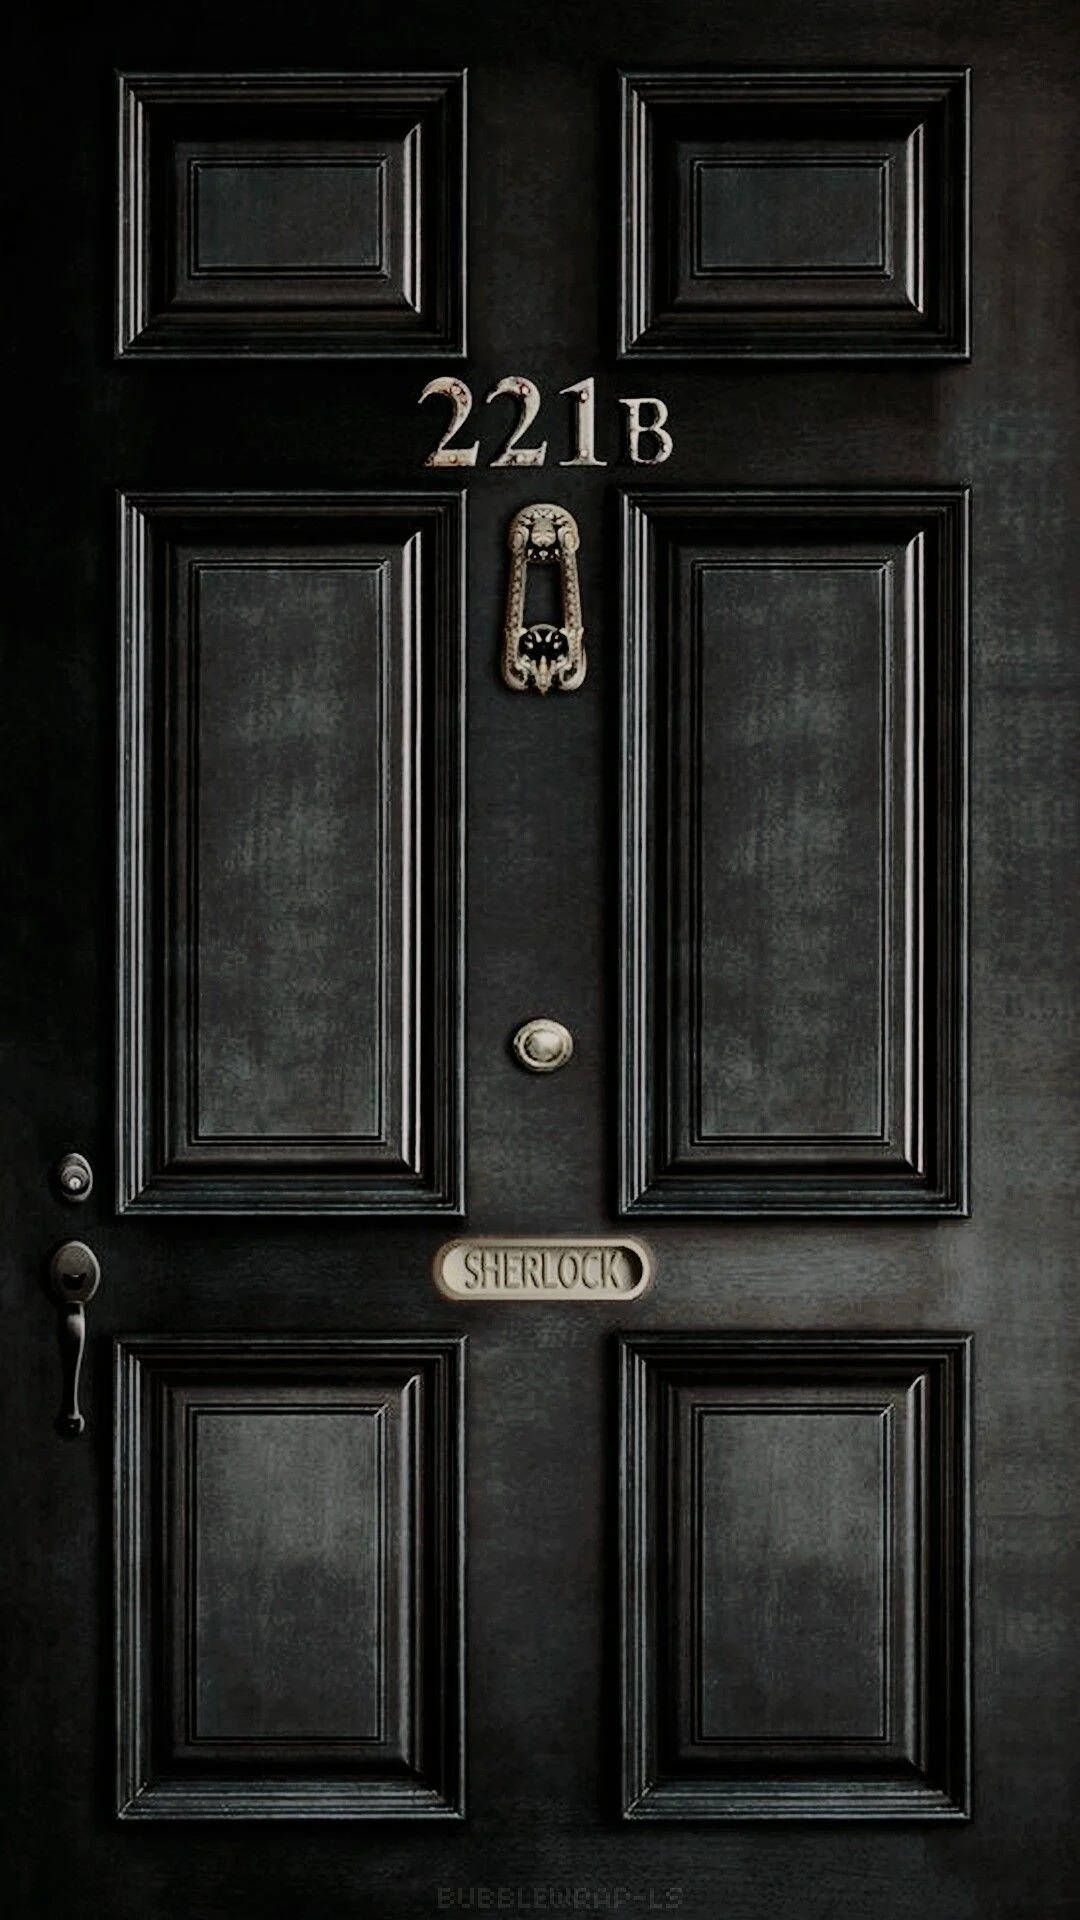 8k Iphone 221b Baker Street Sherlock Holmes Background